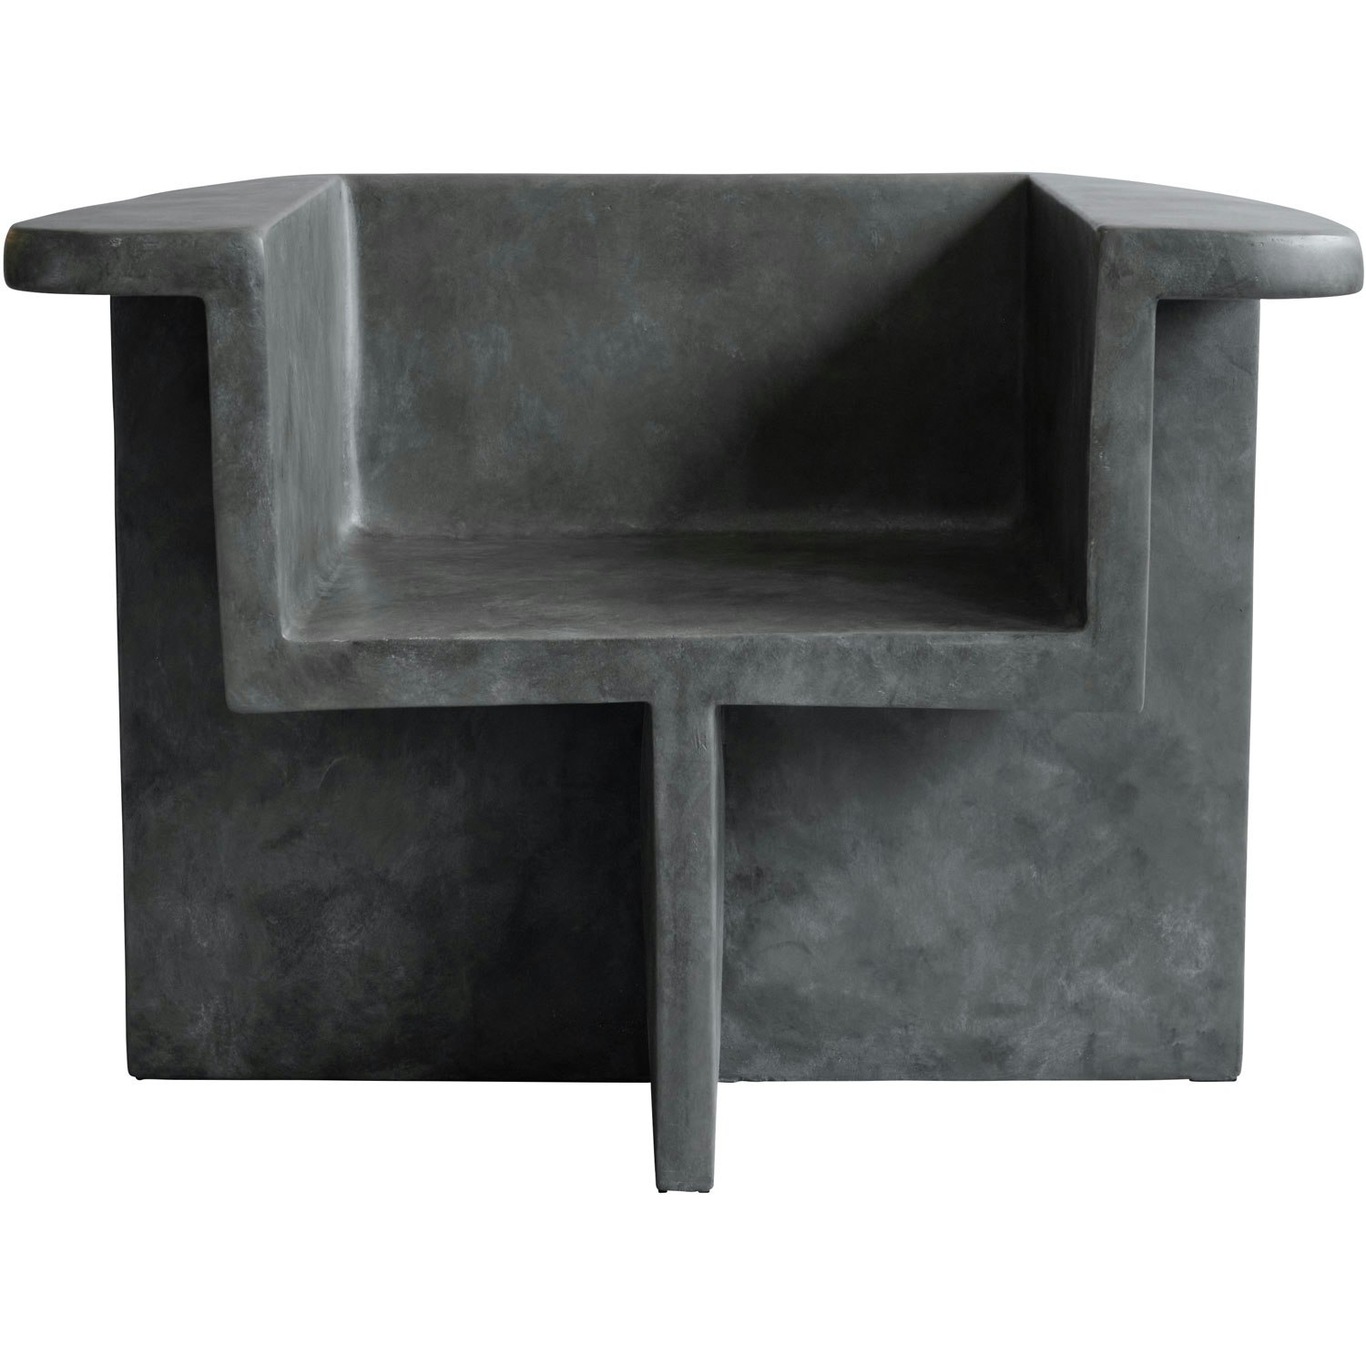 Brutus Lounge Chair, Dark Grey